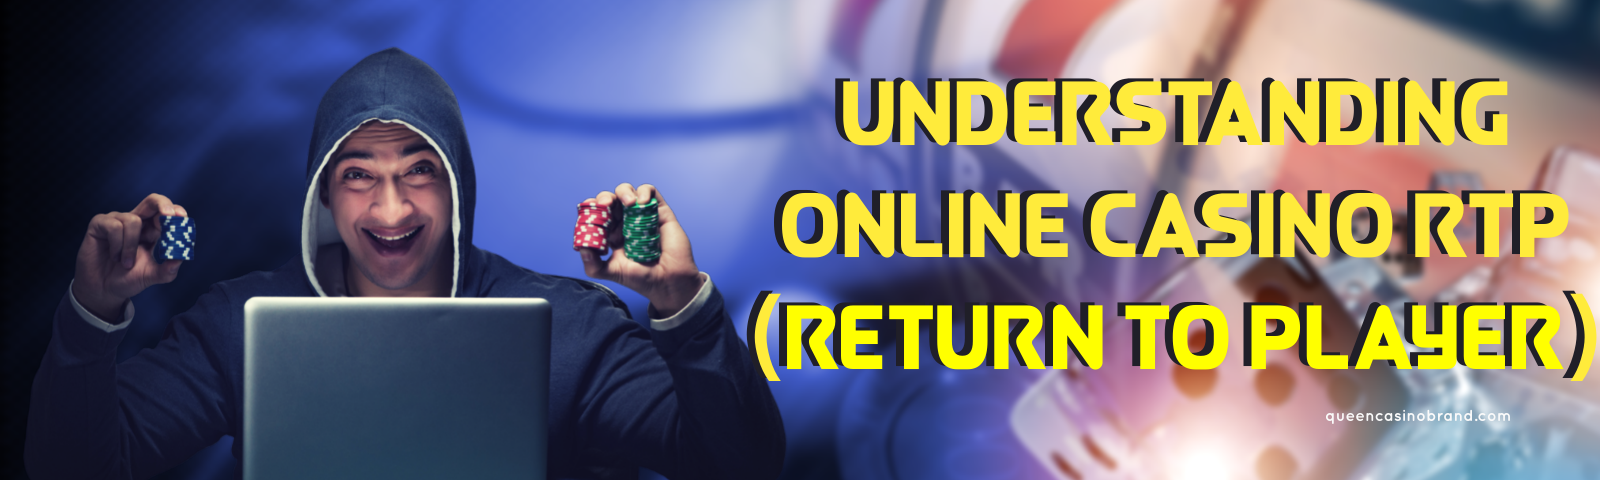 Understanding Online Casino RTP (Return to Player) | Queen Casino Brand